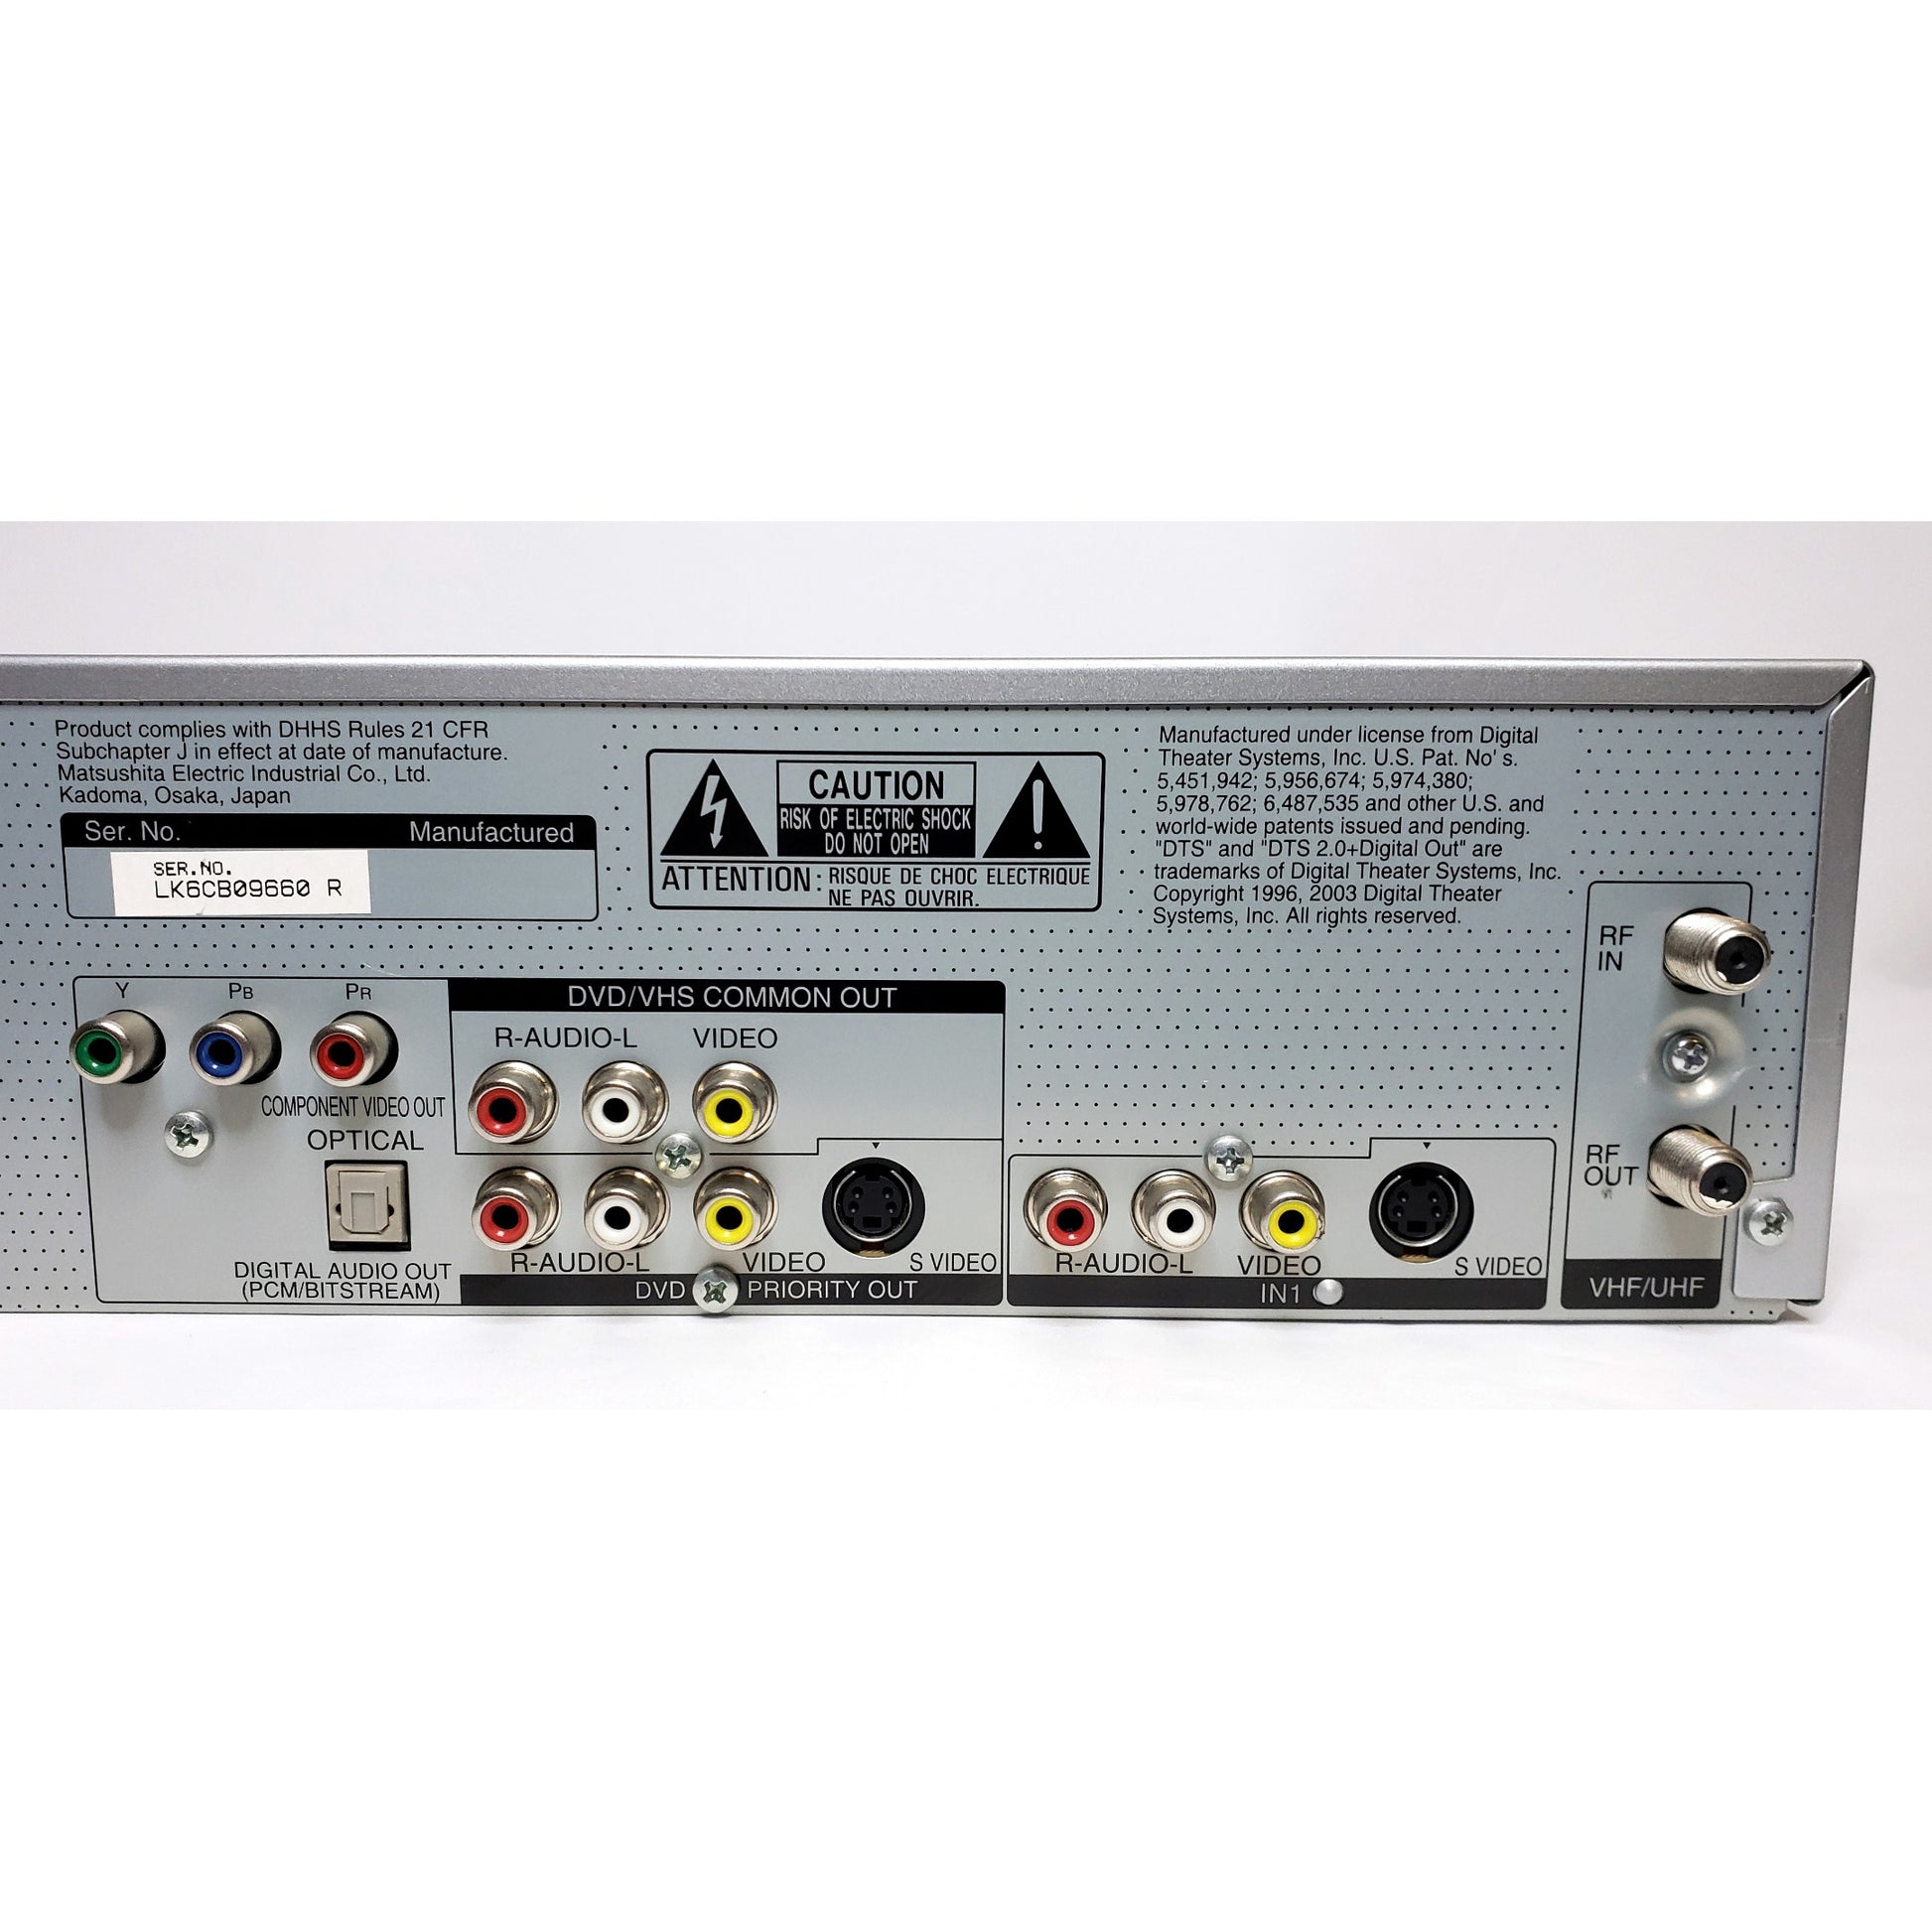 Panasonic DMR-ES35V VCR/DVD Recorder Combo - Connections